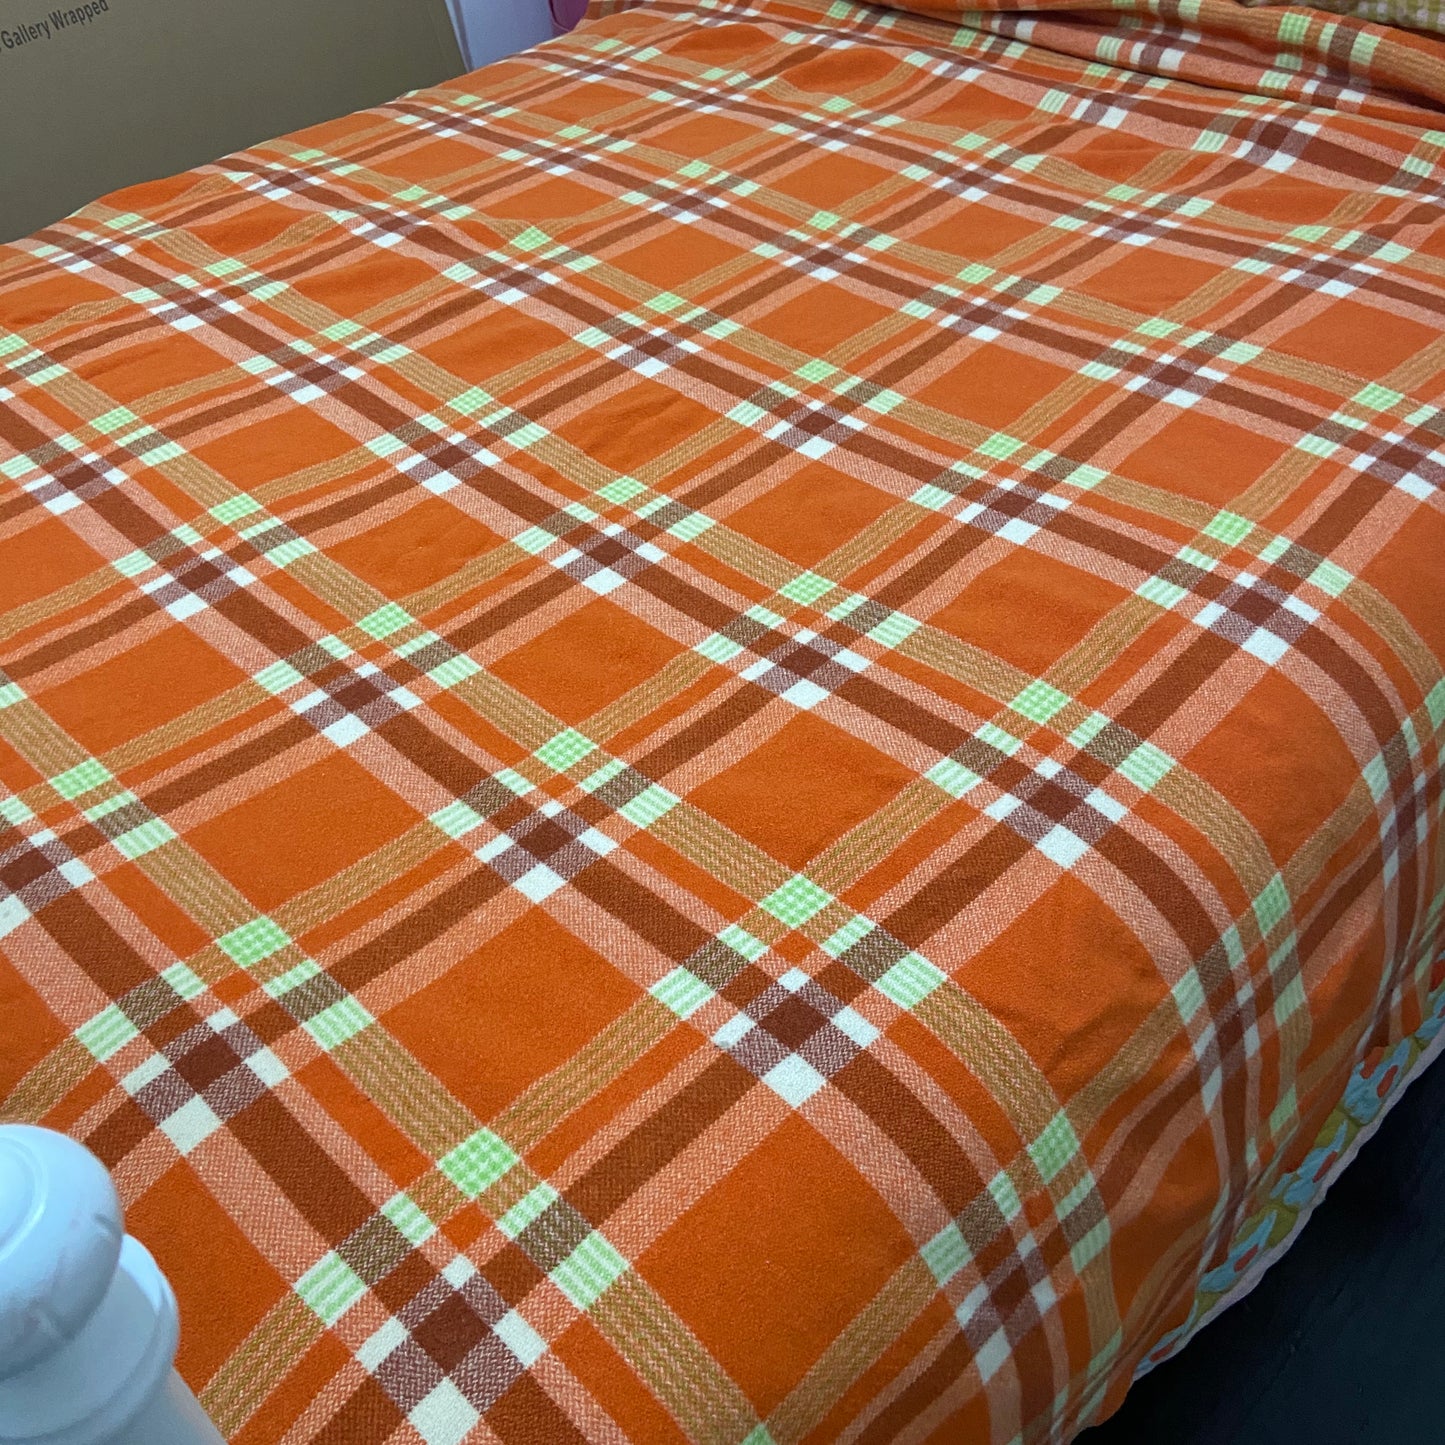 ORANGE Blanket Checked RETRO Bedroom Clean Vintage 70's Charm